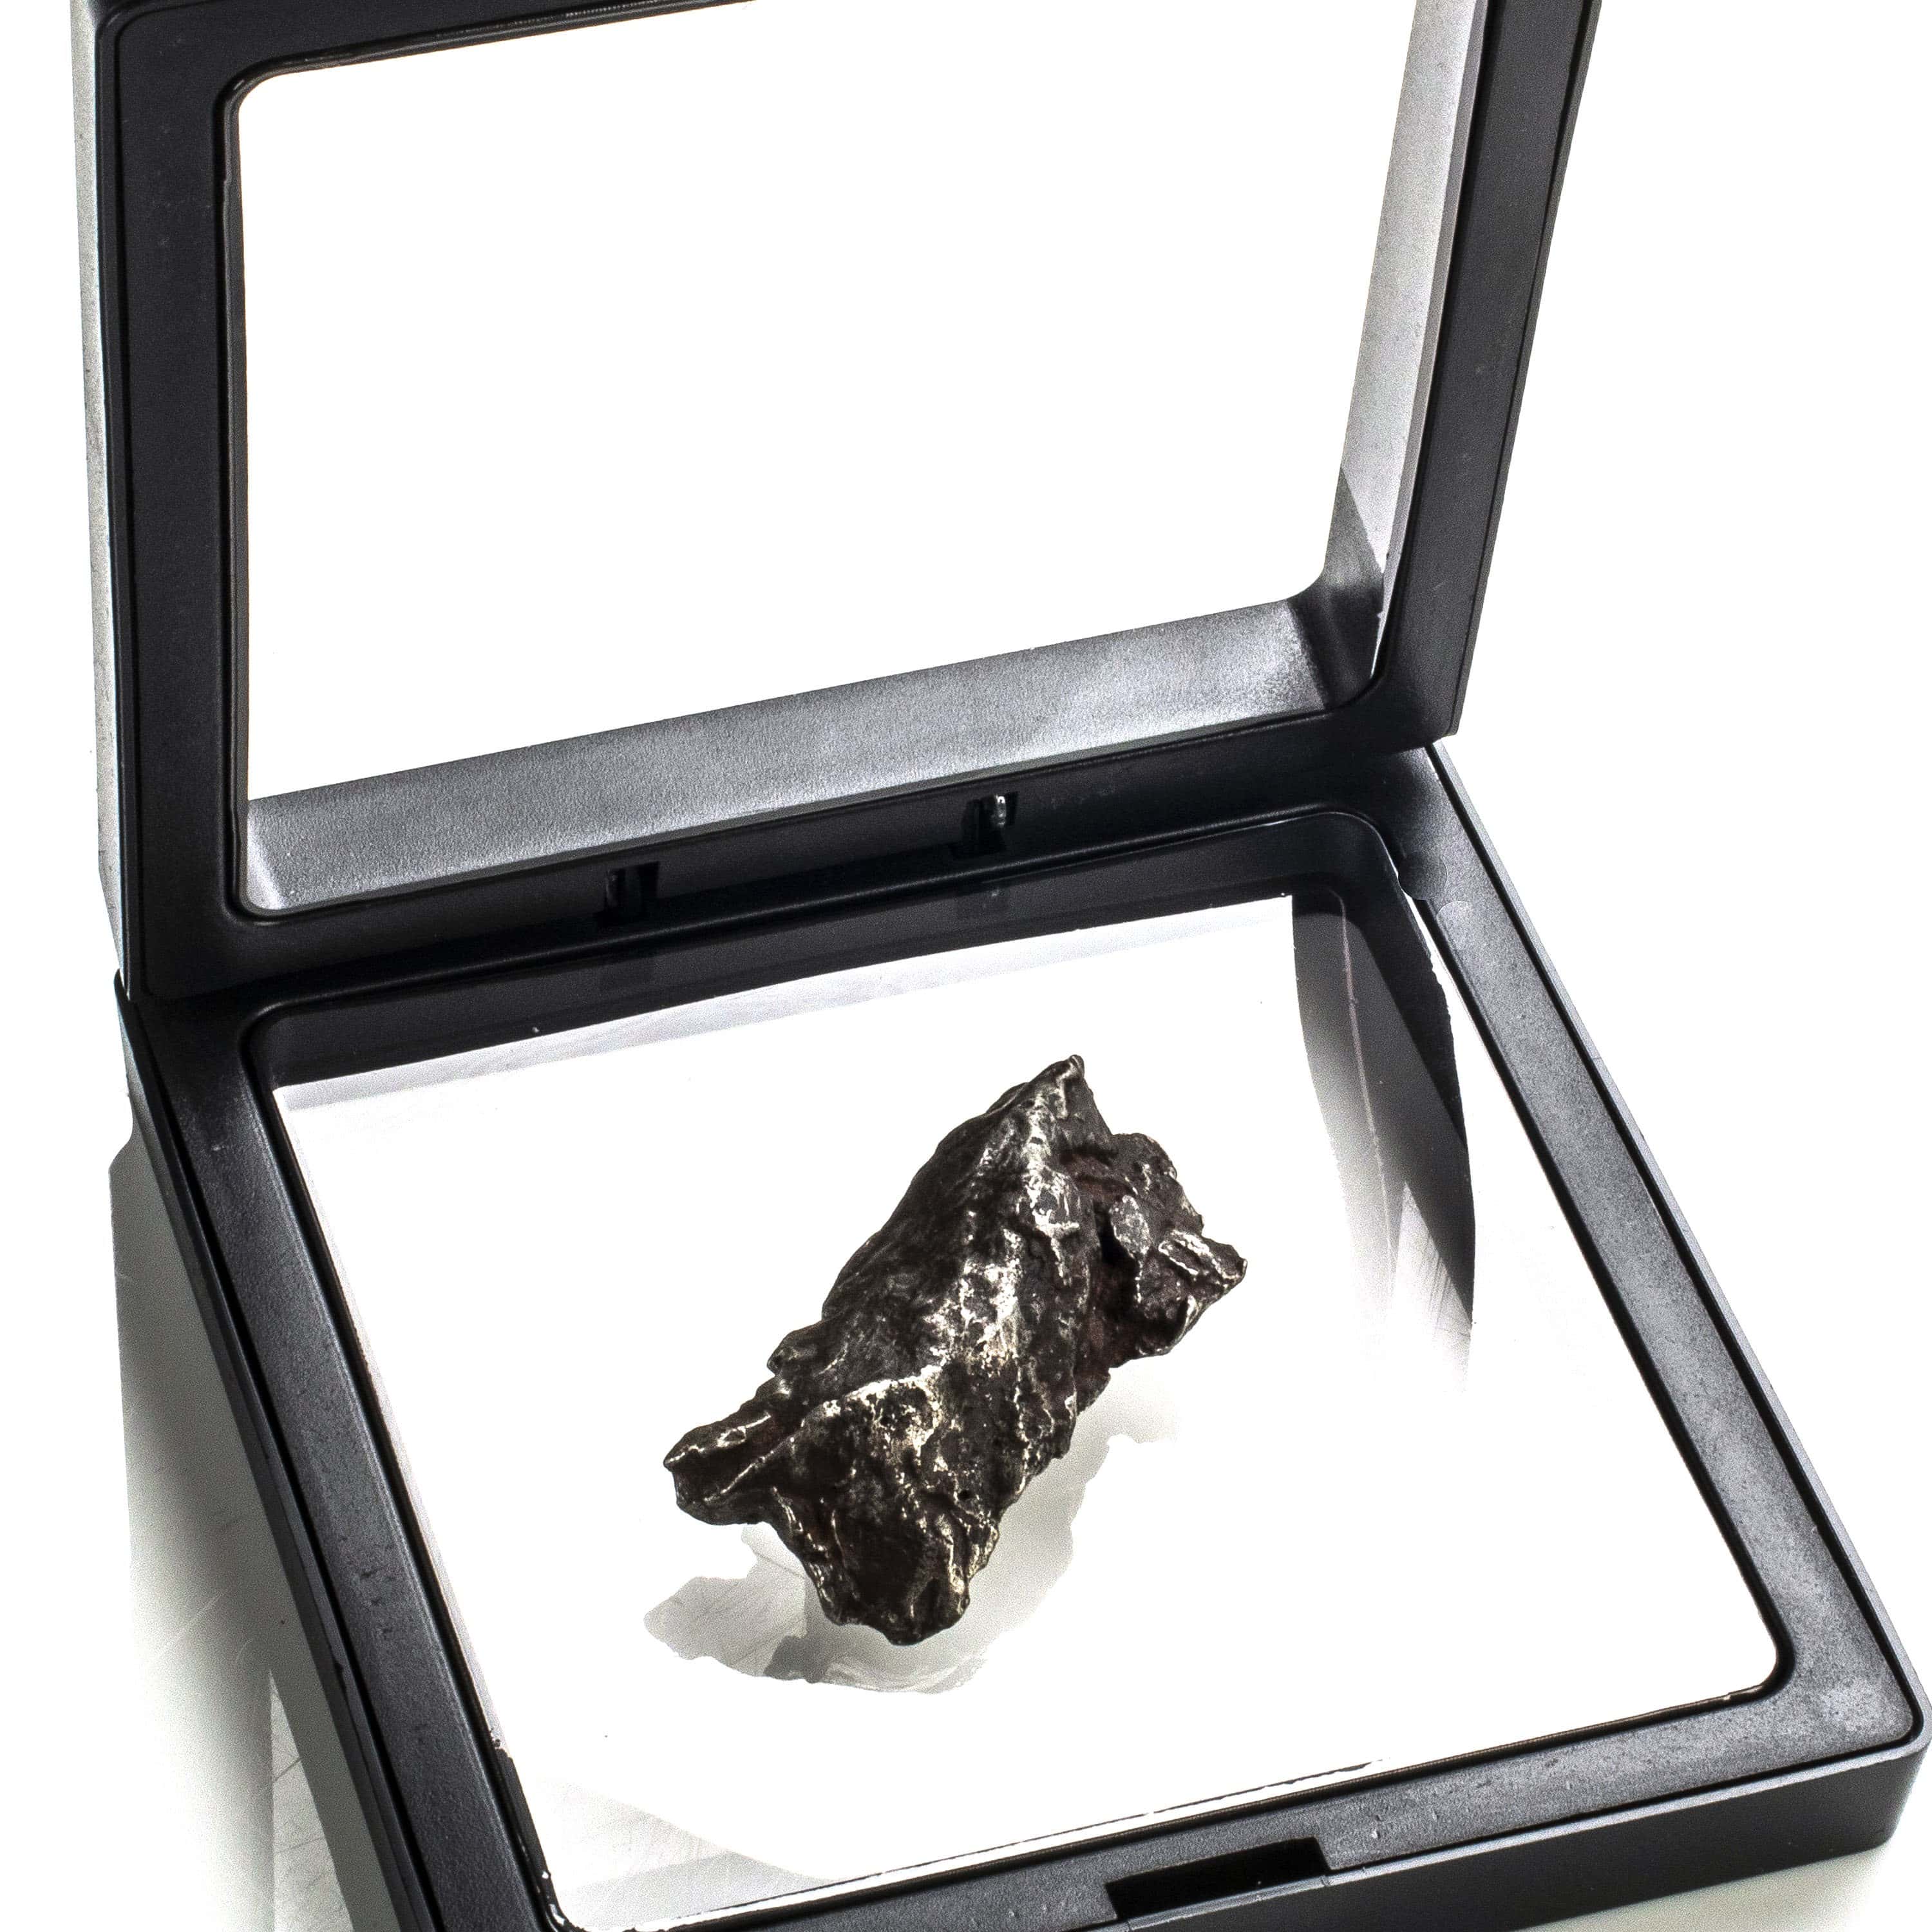 Kalifano Meteorites Natural Sikhote-Alin Meteorite from Russia - 32 grams MTS600